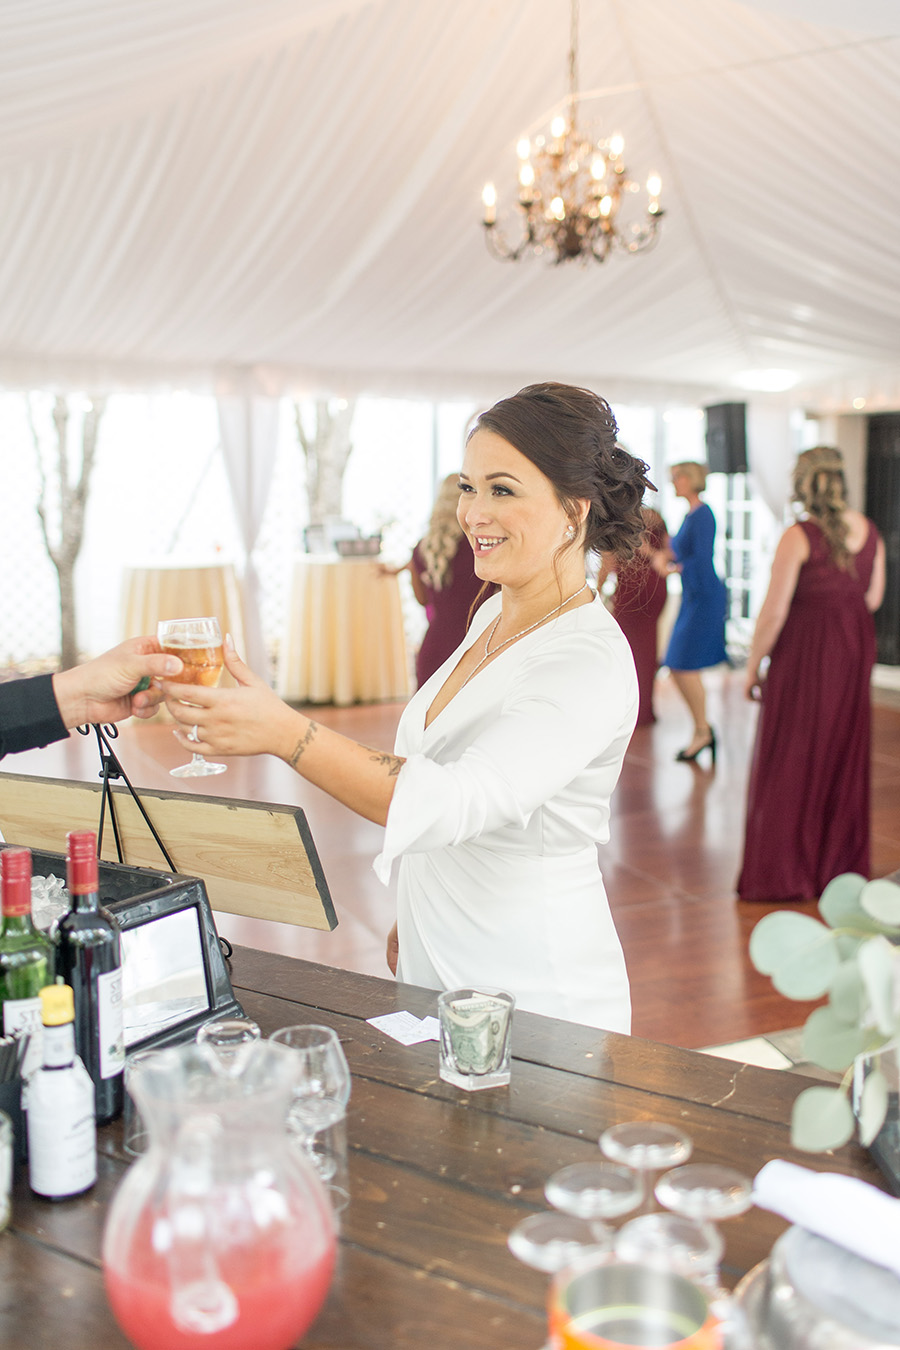 Signature drink at wedding